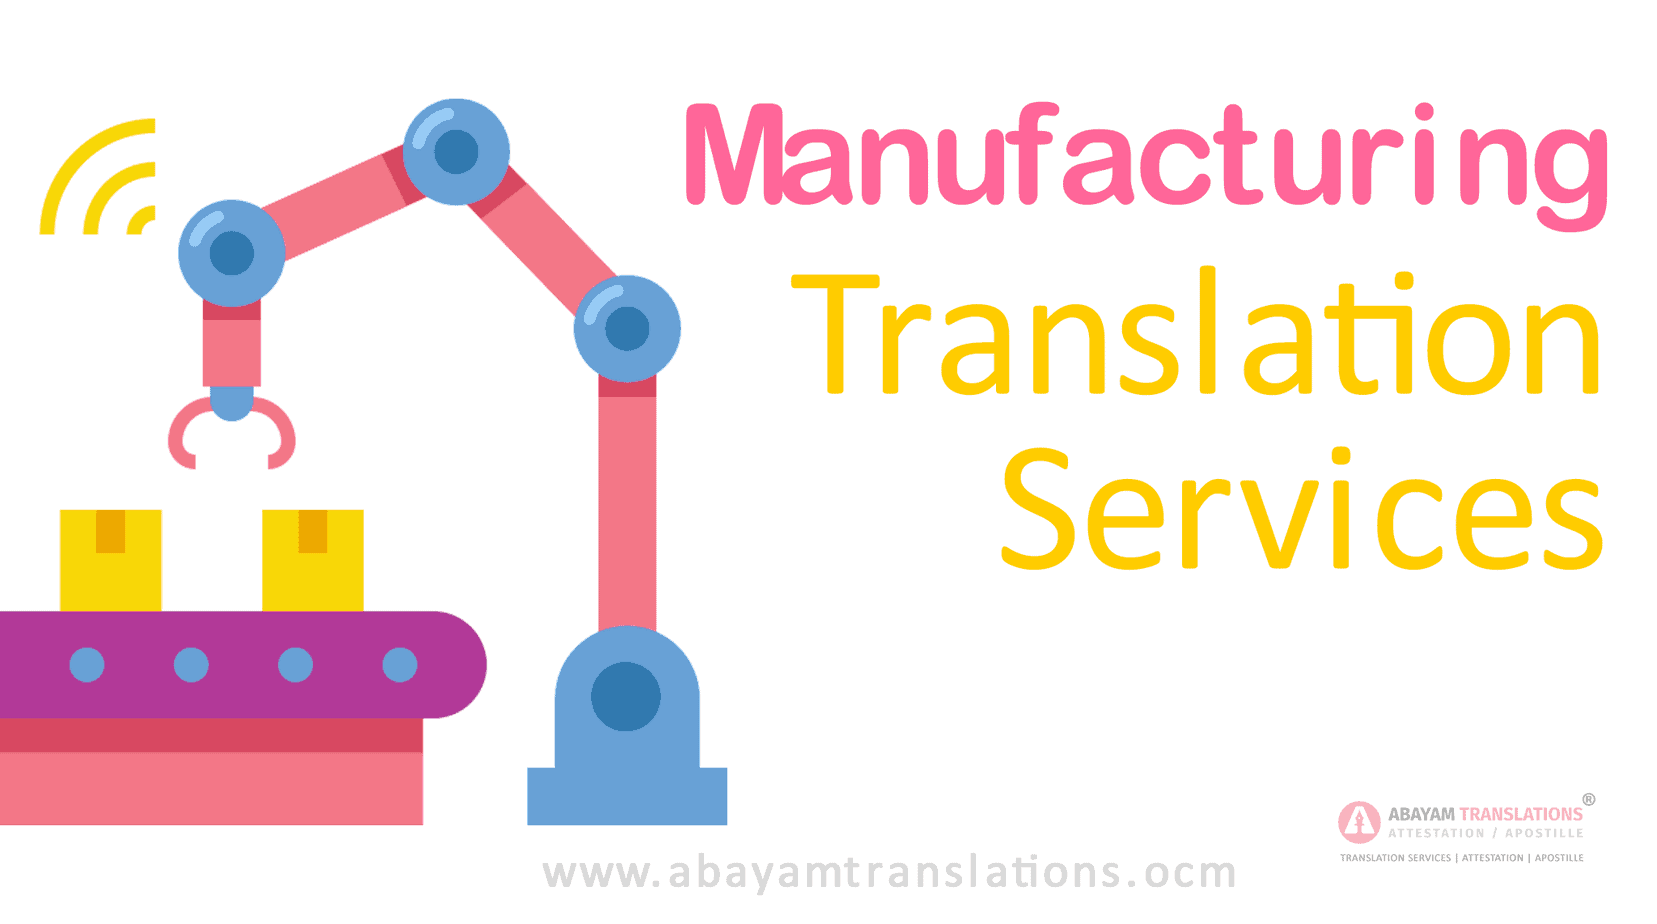 Manufacturing Translation Services